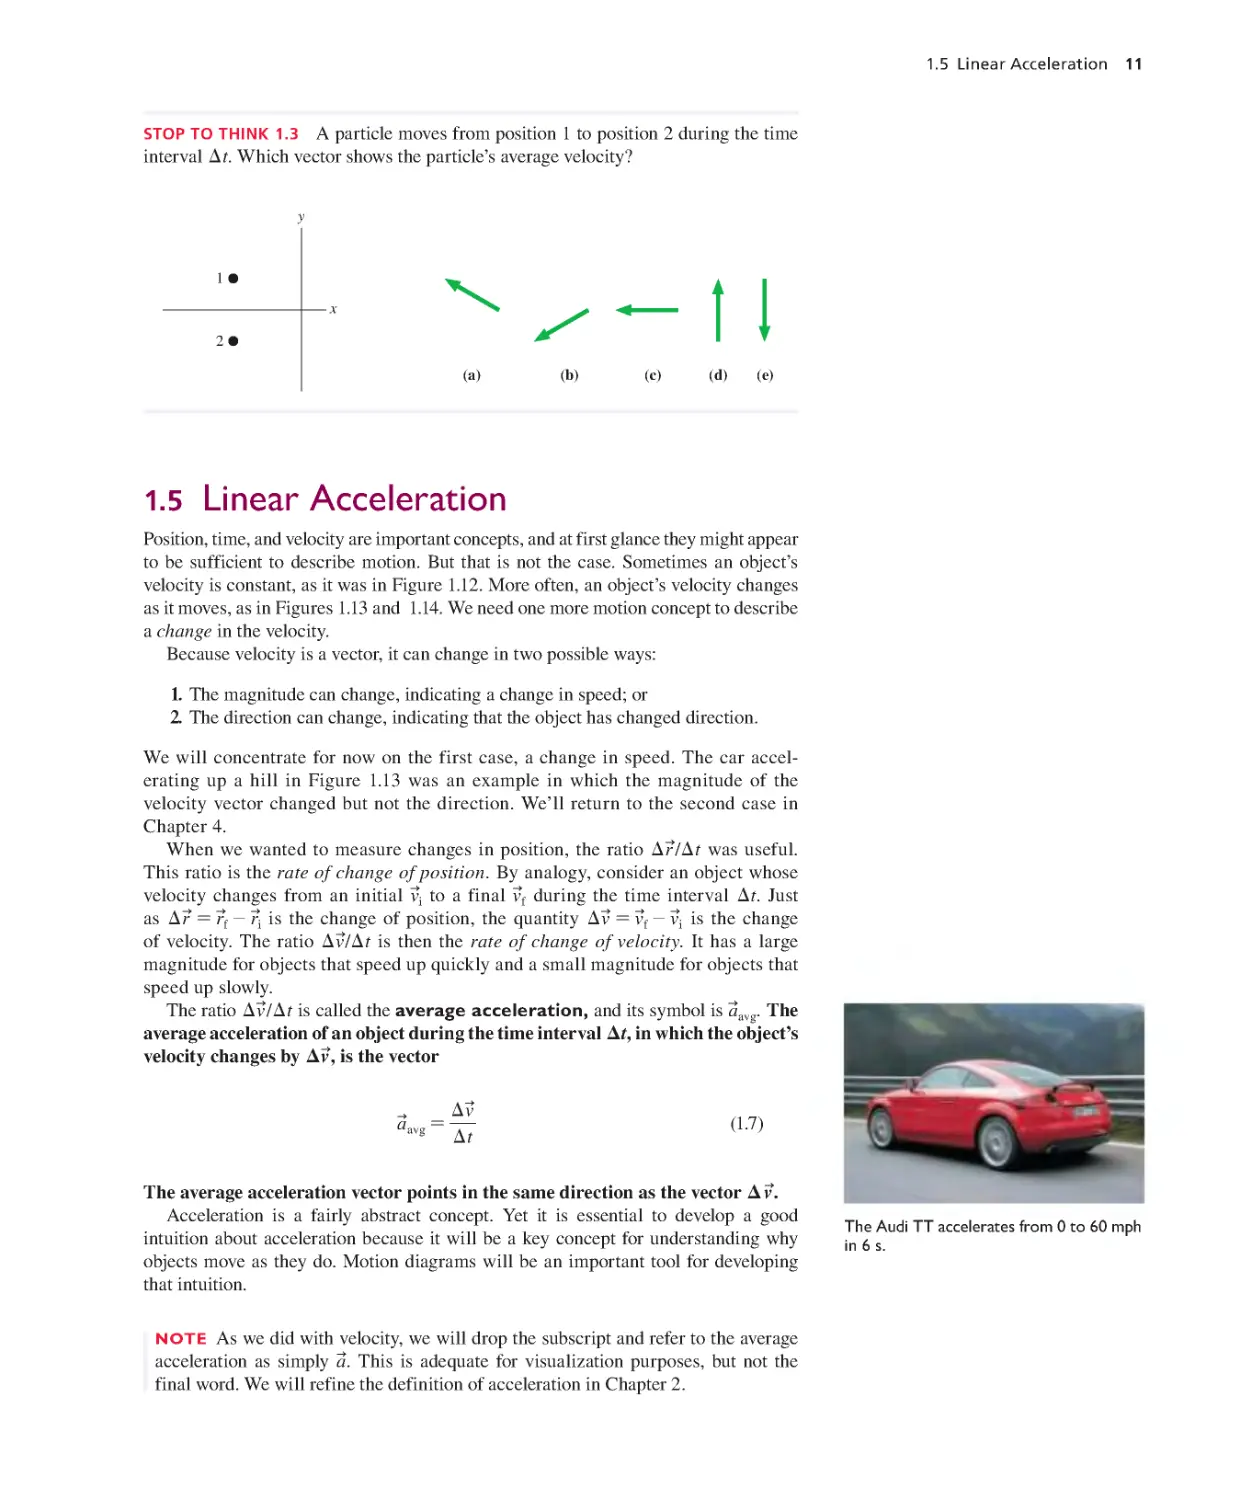 1.5. Linear Acceleration